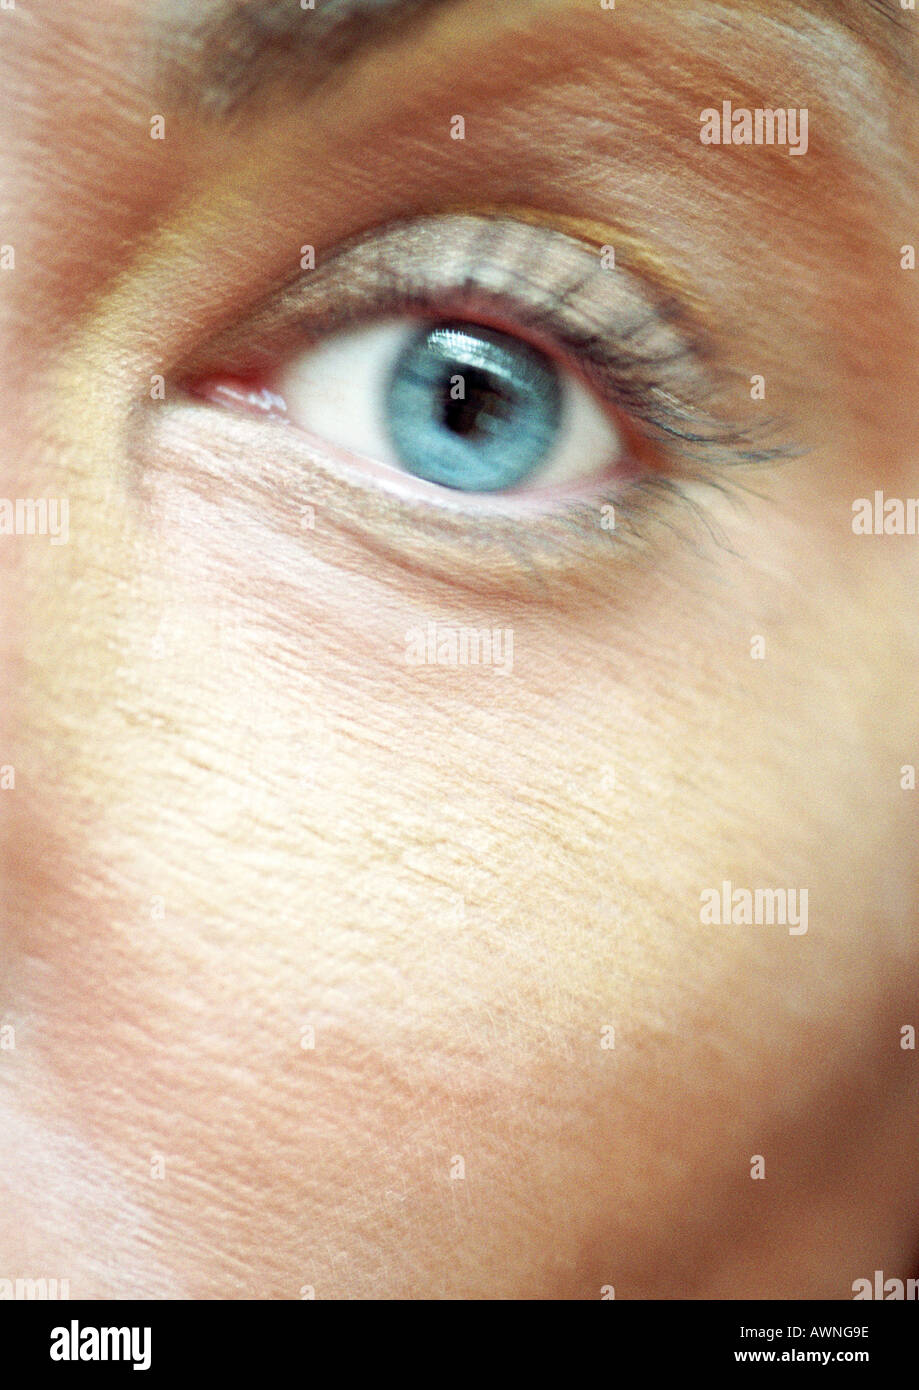 Woman's blue eye, looking at camera, blurred close up. Stock Photo